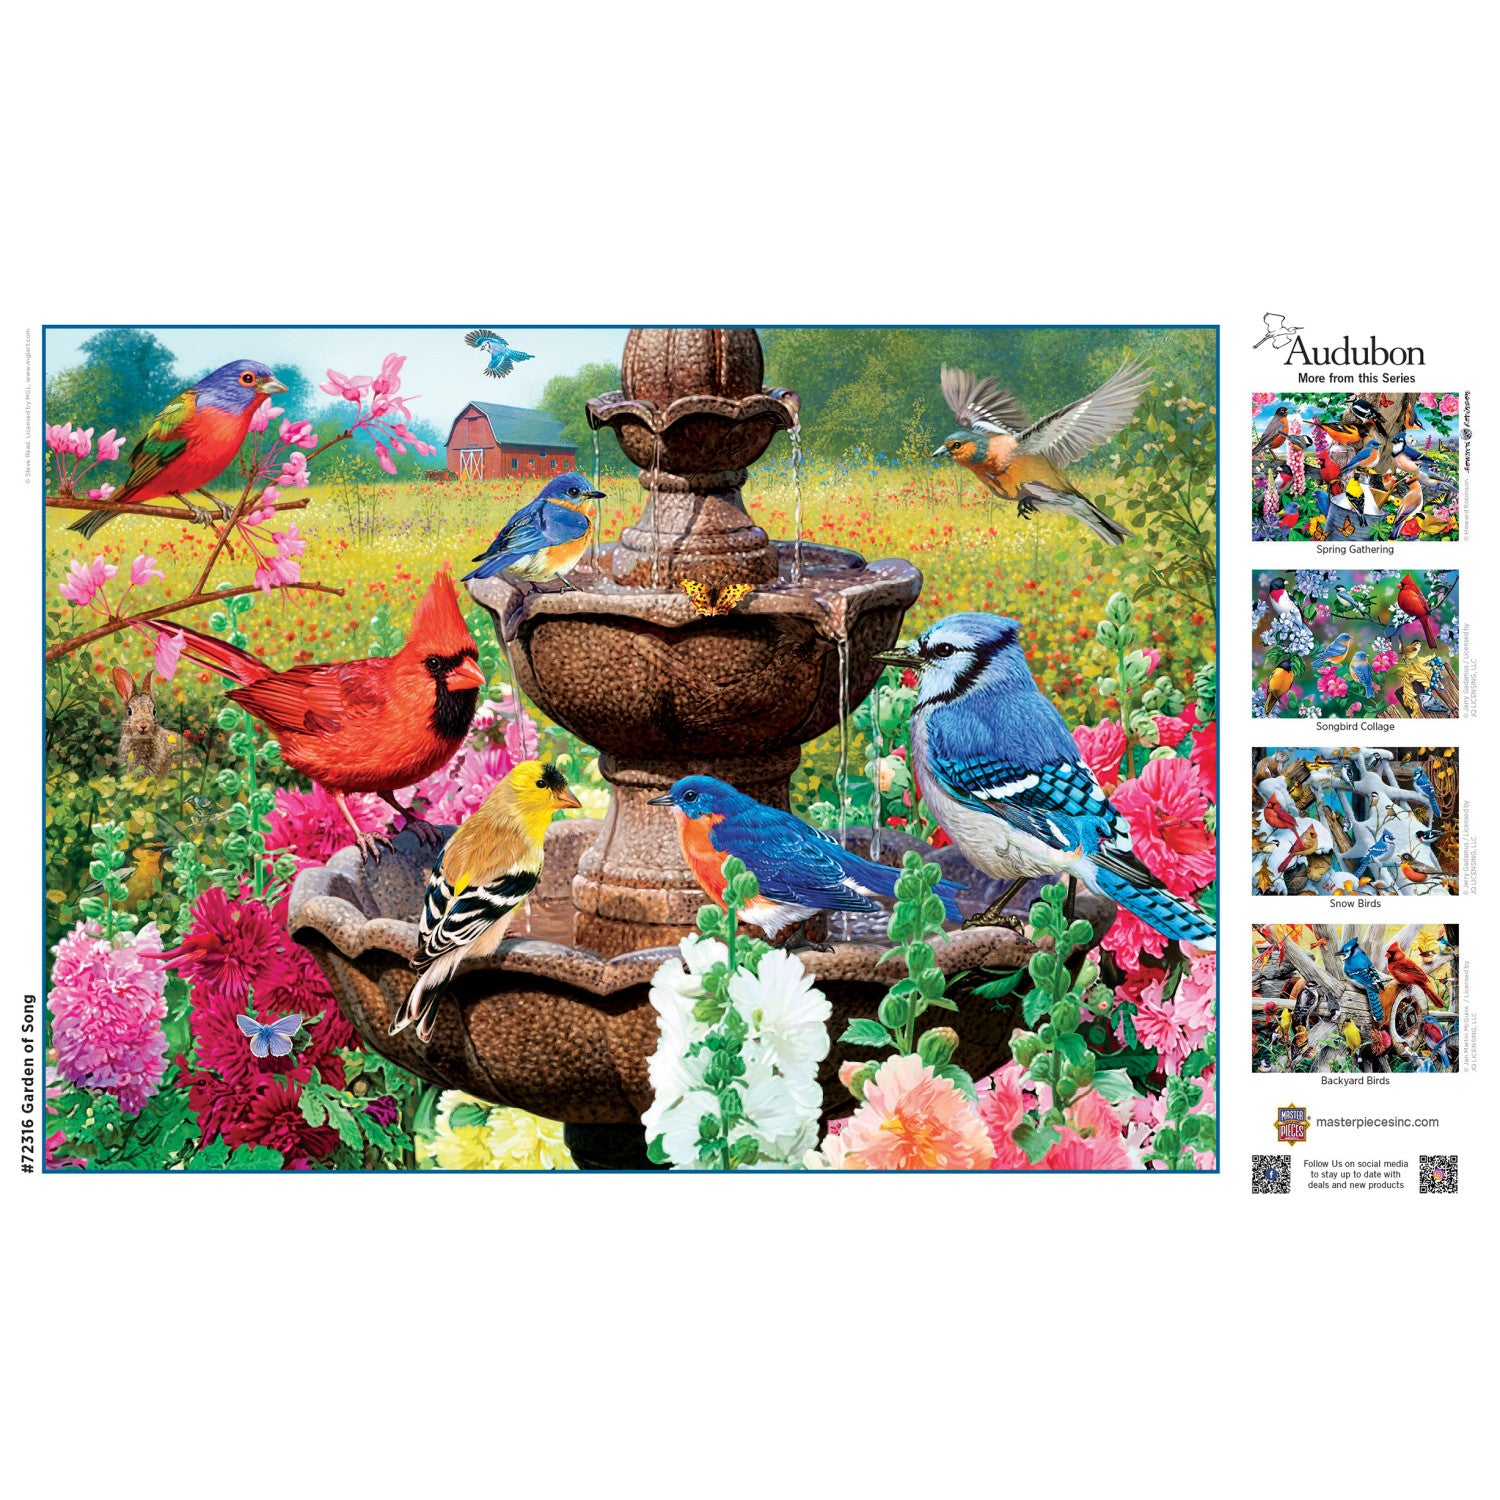 Audubon - Garden of Song 1000 Piece Jigsaw Puzzle